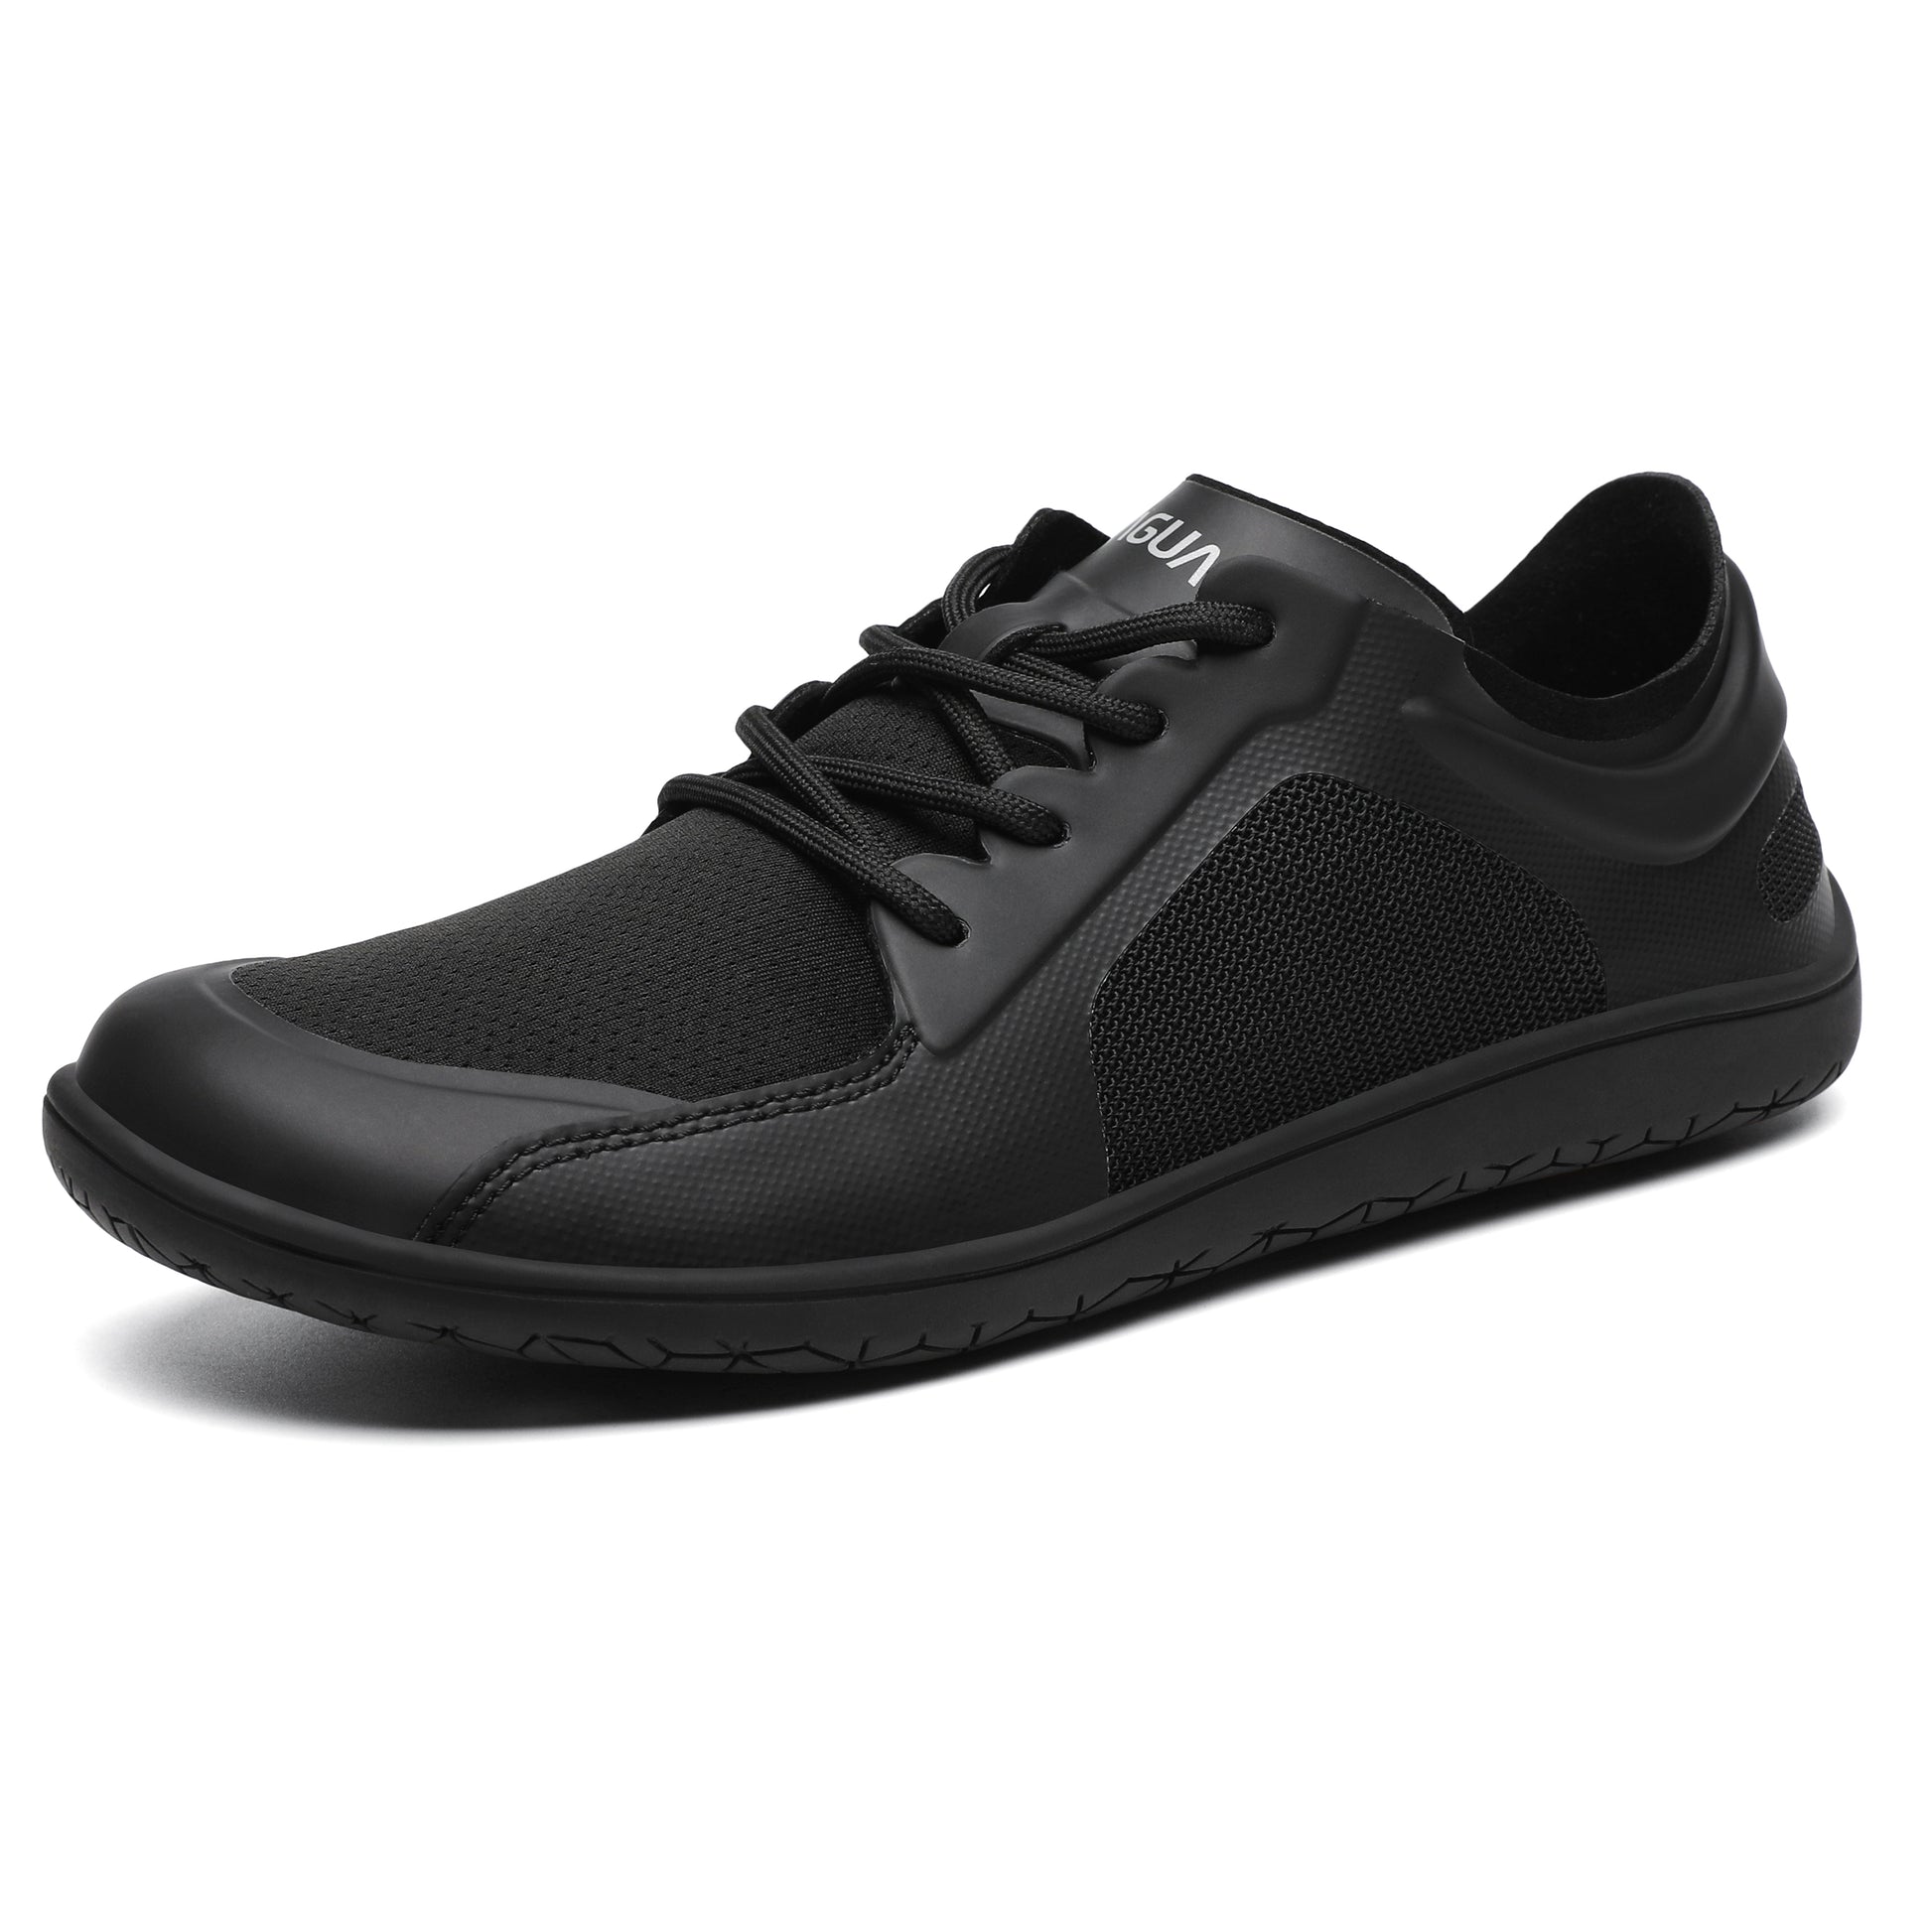 zapatos barefoot 2341 negro